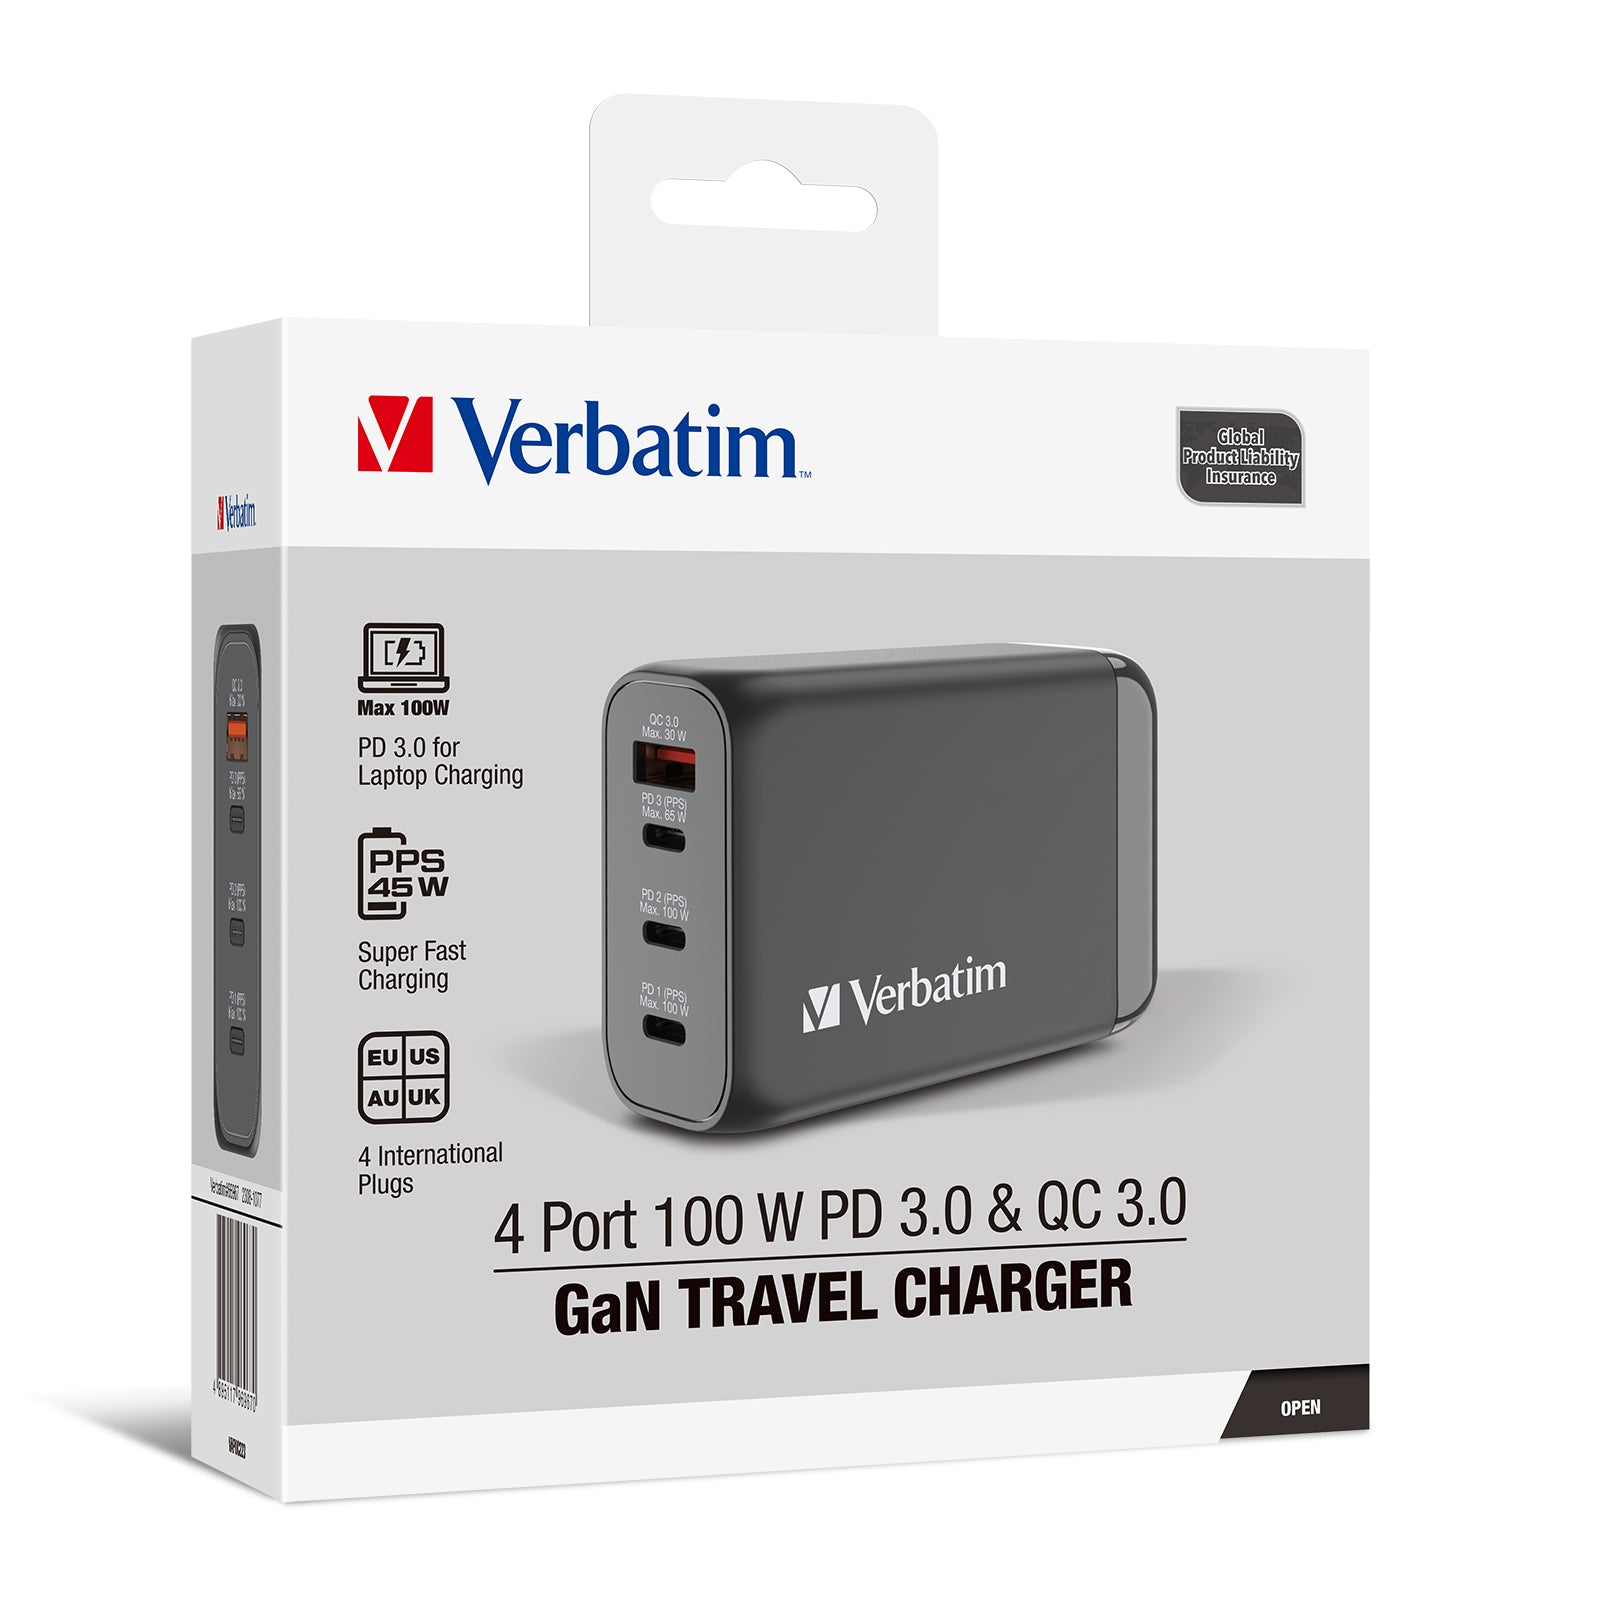 Verbatim 4 Port 100W PD 3.0 & QC 3.0 GaN Travel Charger